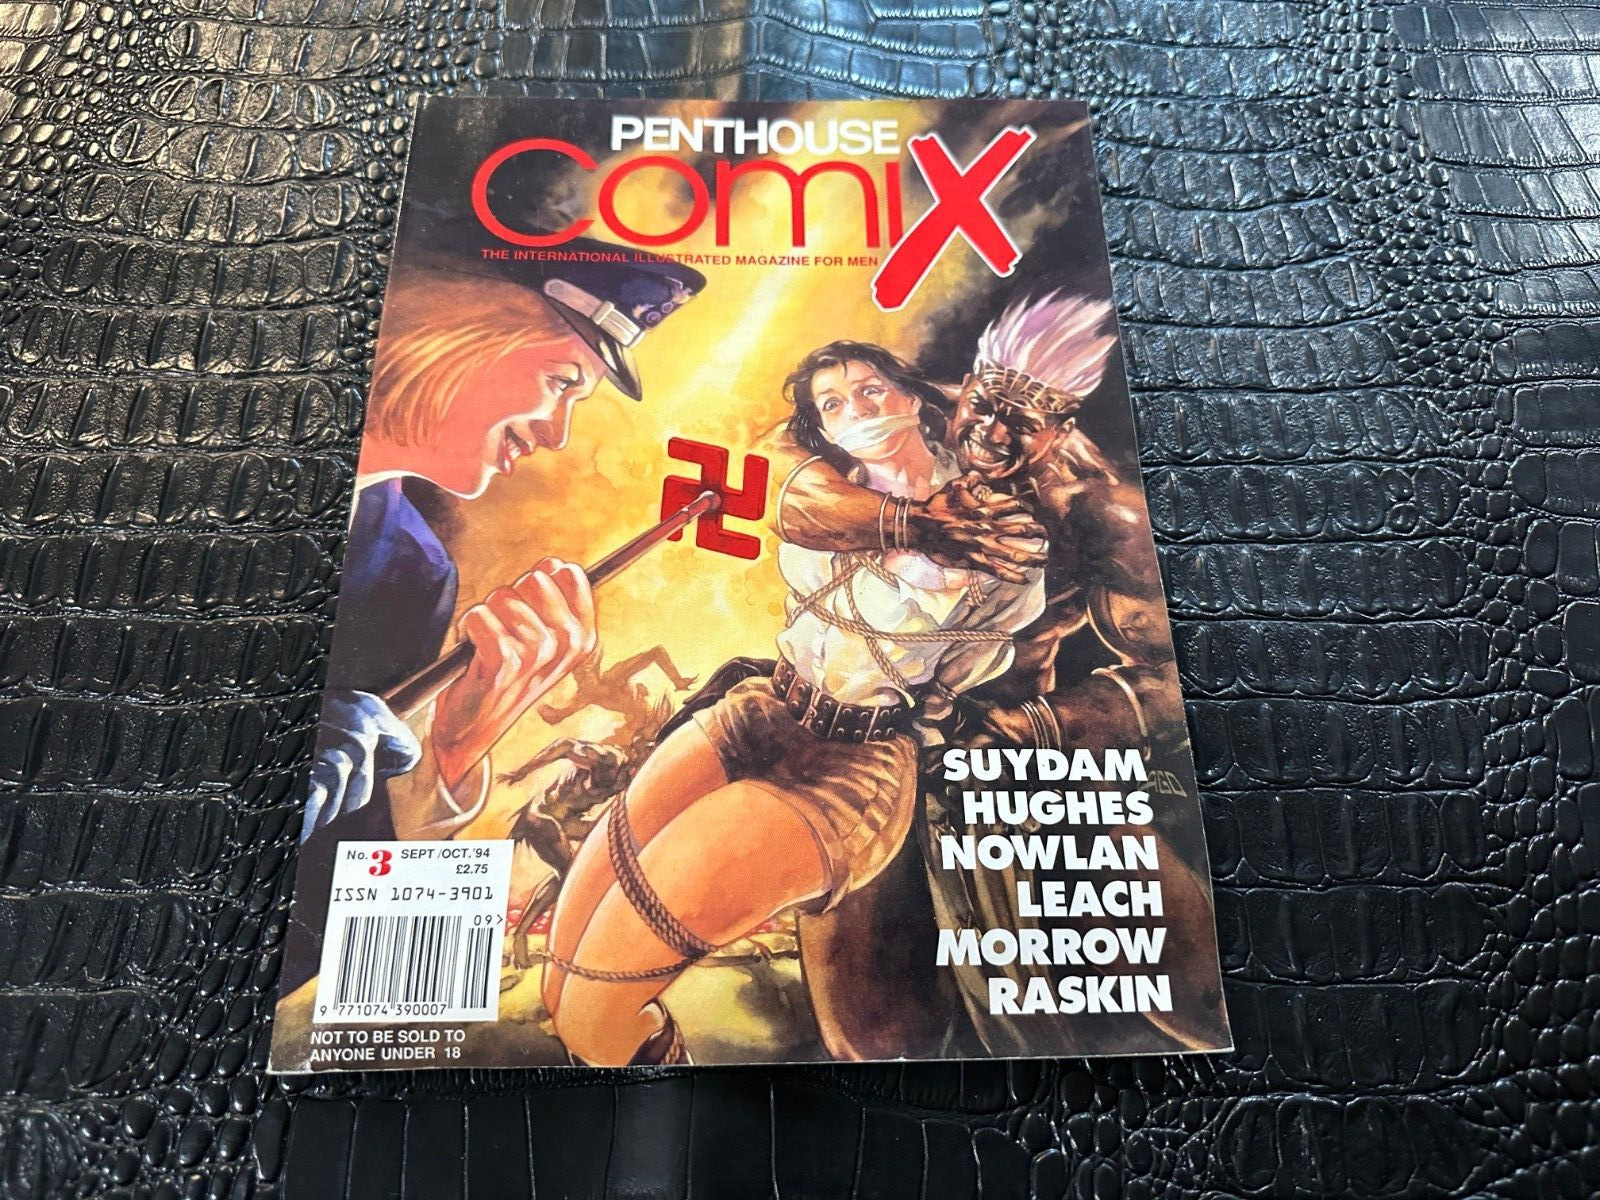 Penthouse Comix magazine SEPTEMBER/OCTOBER 1994 #3 (UNREAD)